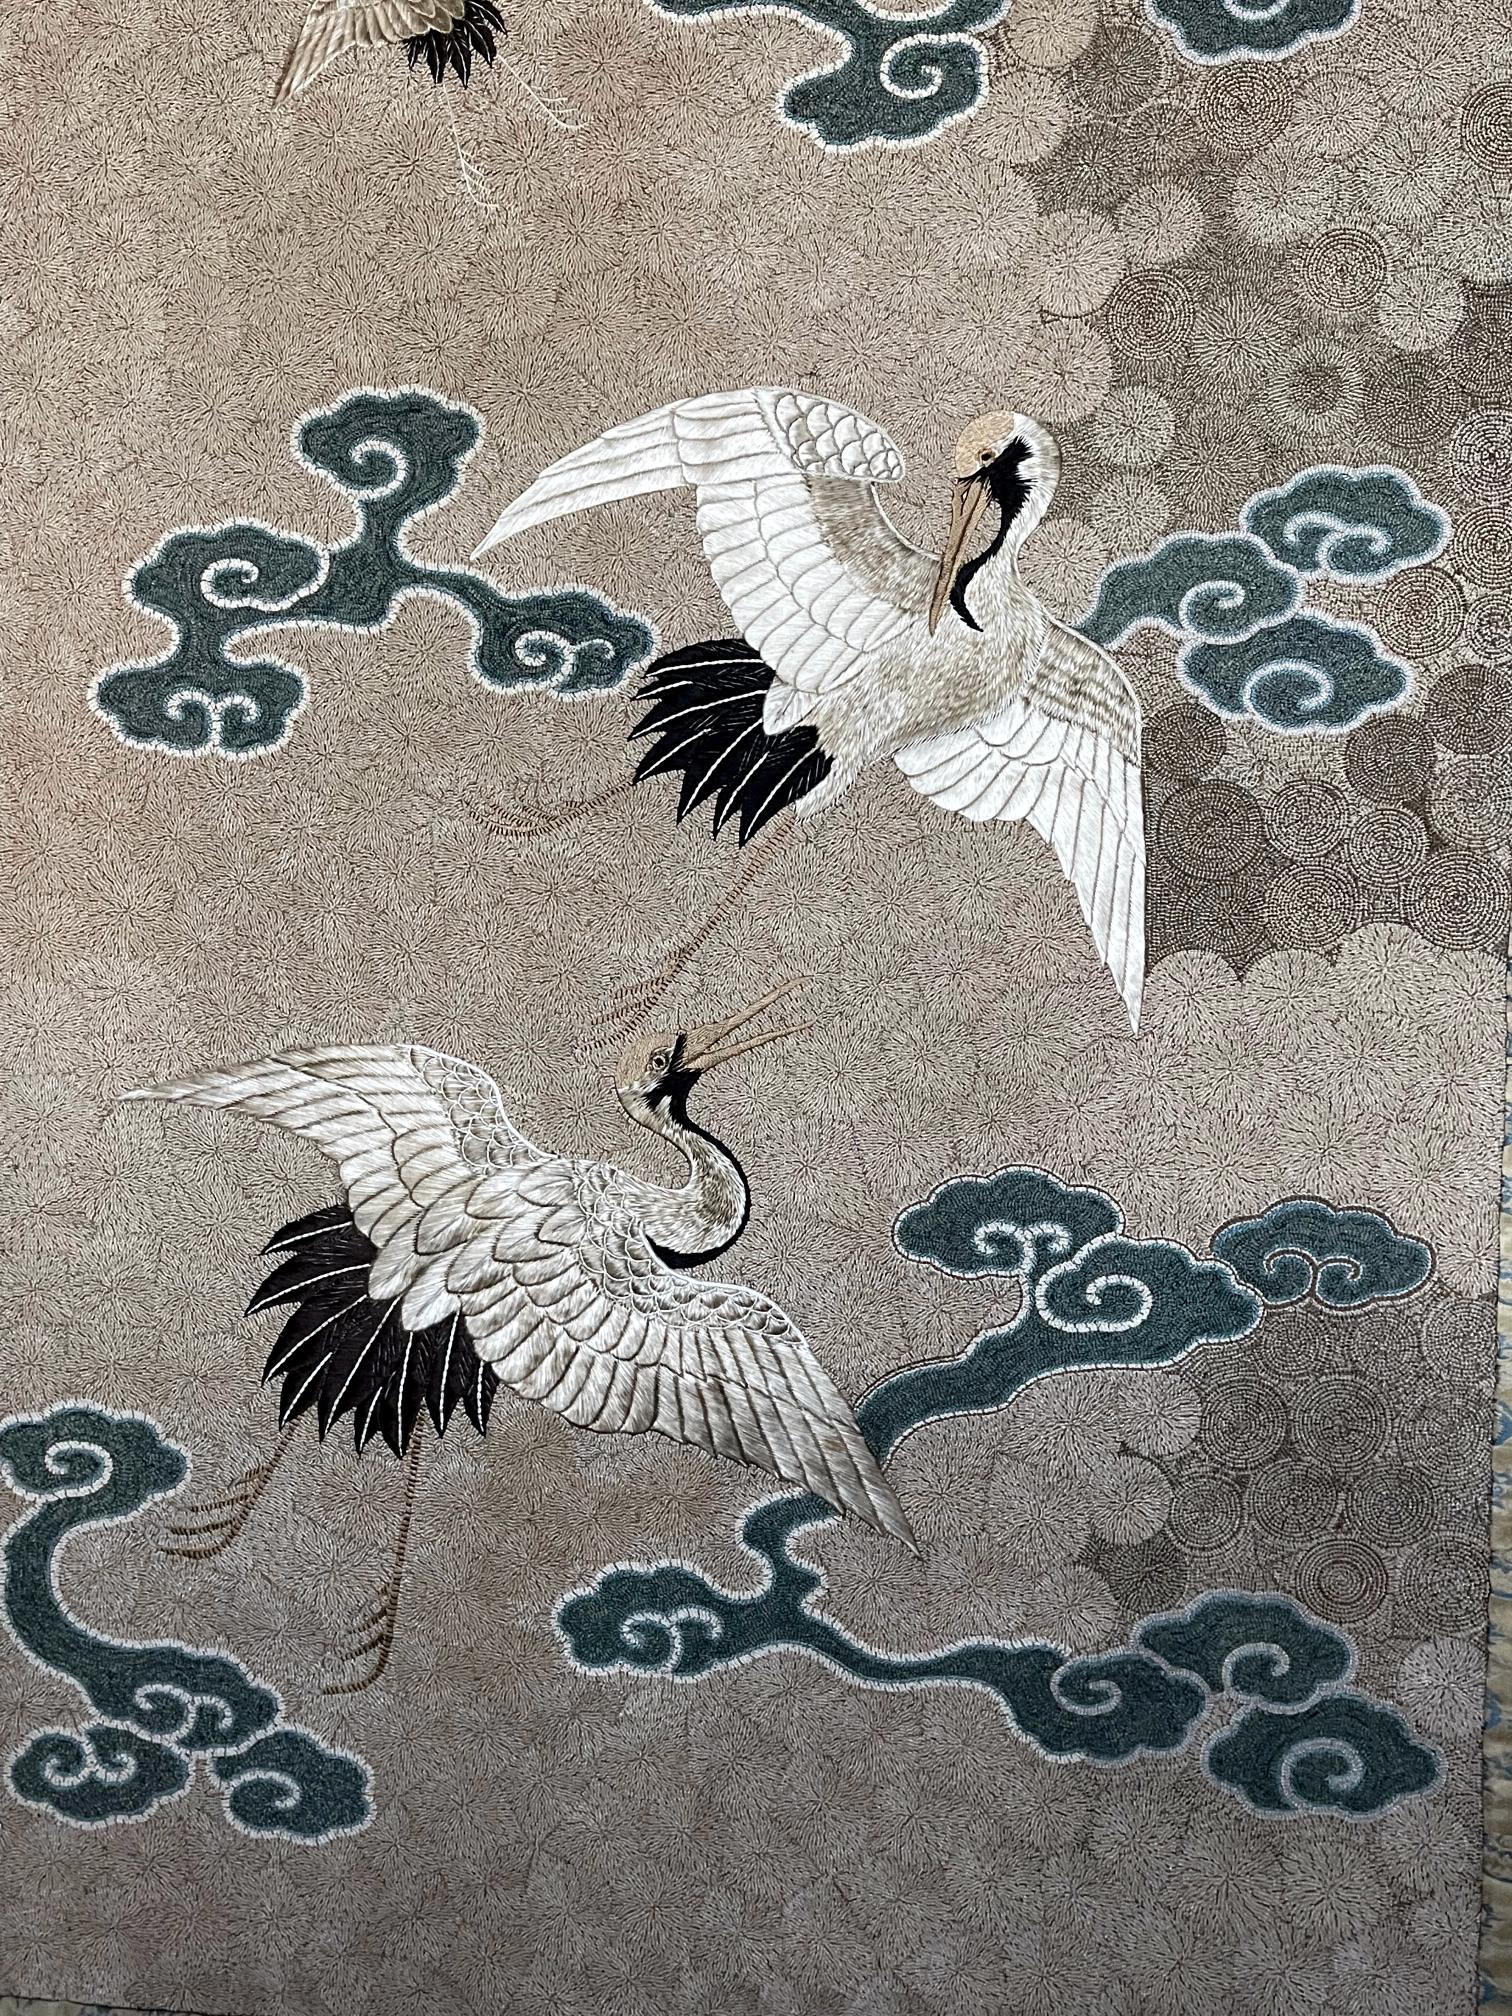 Japonisme Framed Japanese Embroidery Textile Panel Meiji Period